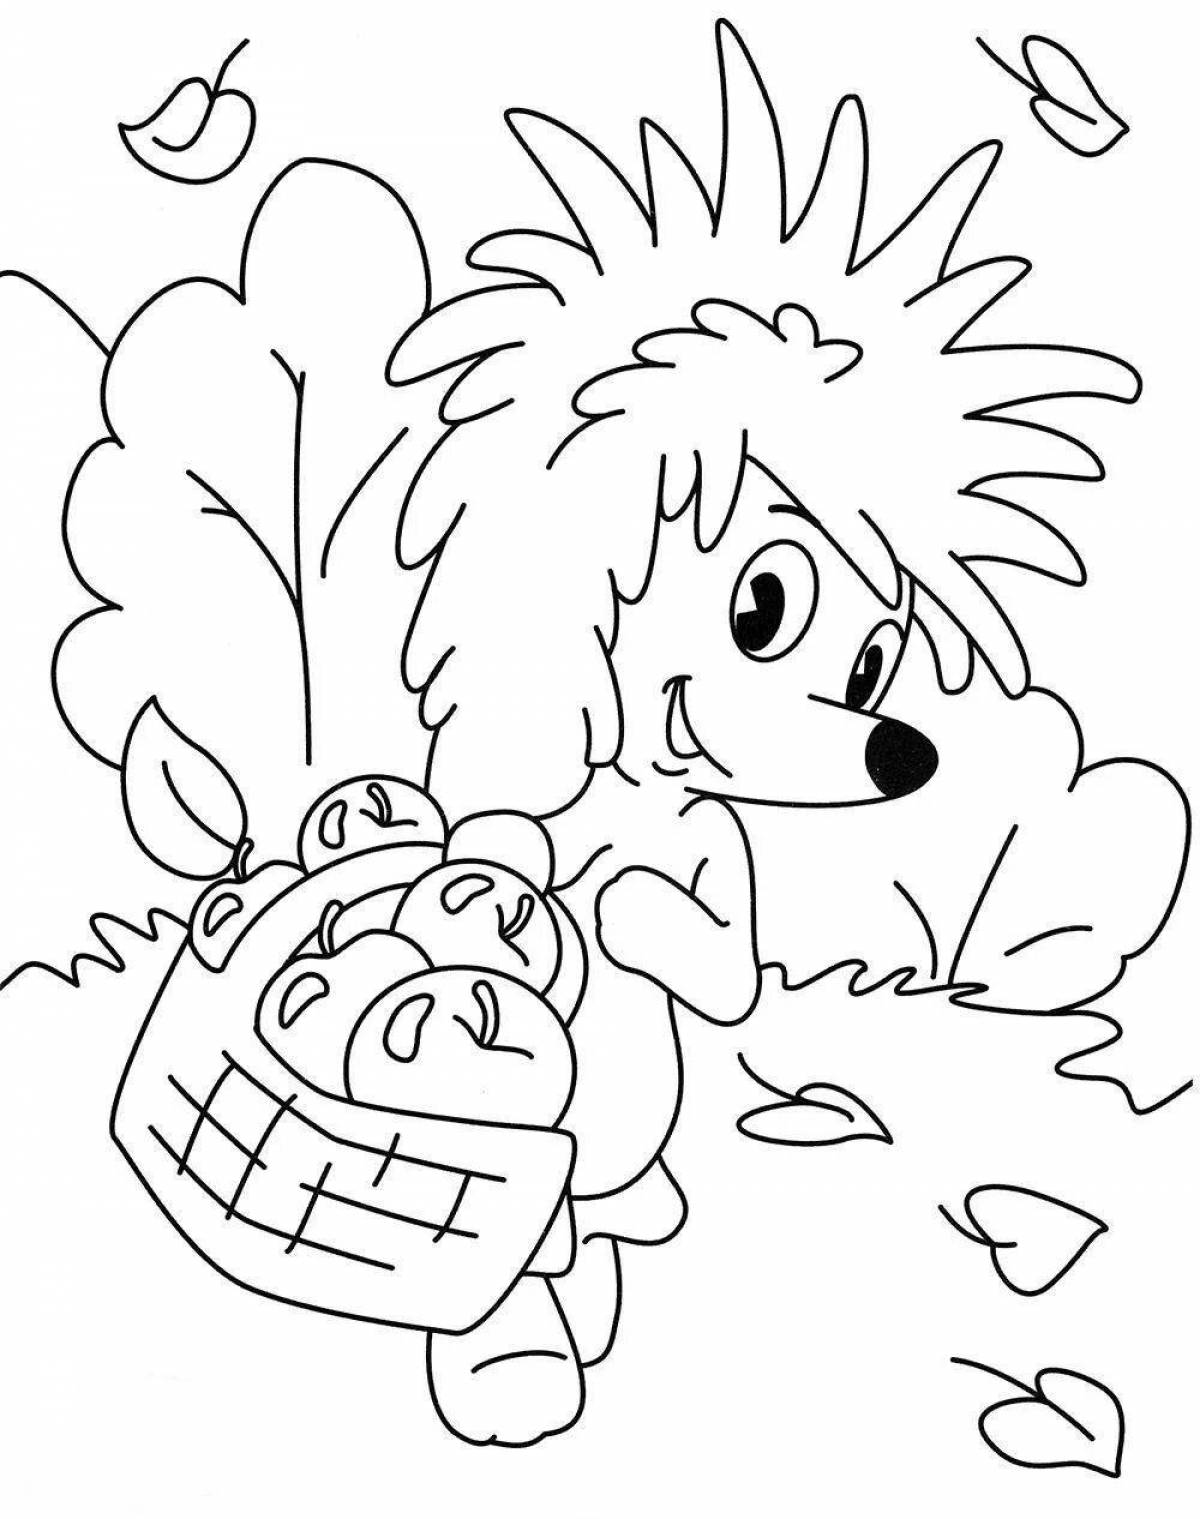 Fun coloring hedgehog and teddy bear